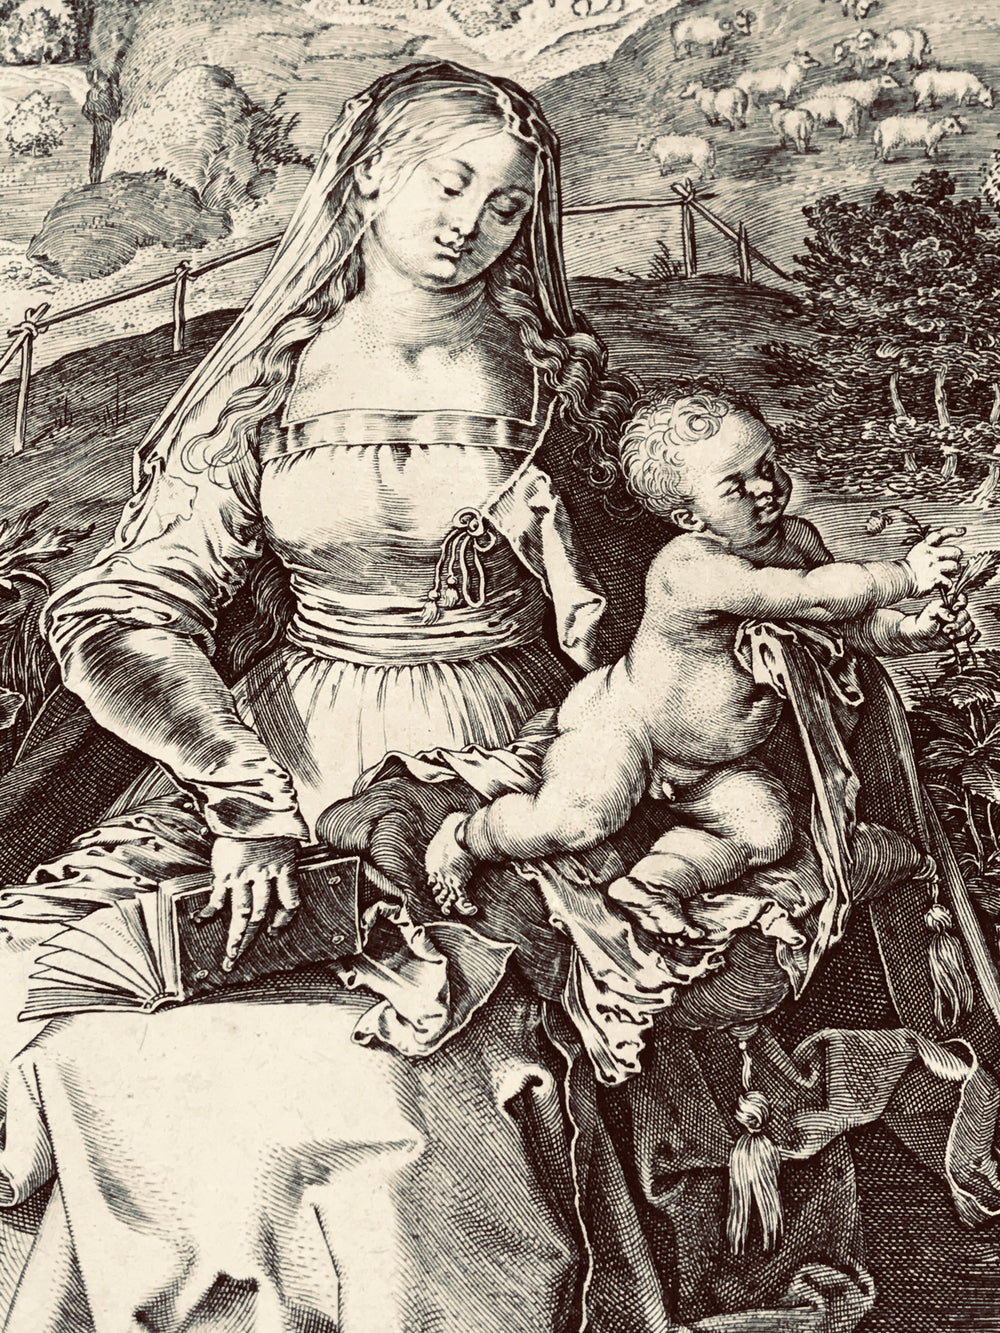 Aegidius Sadeler Virgin and Child after Albrecht Dürer